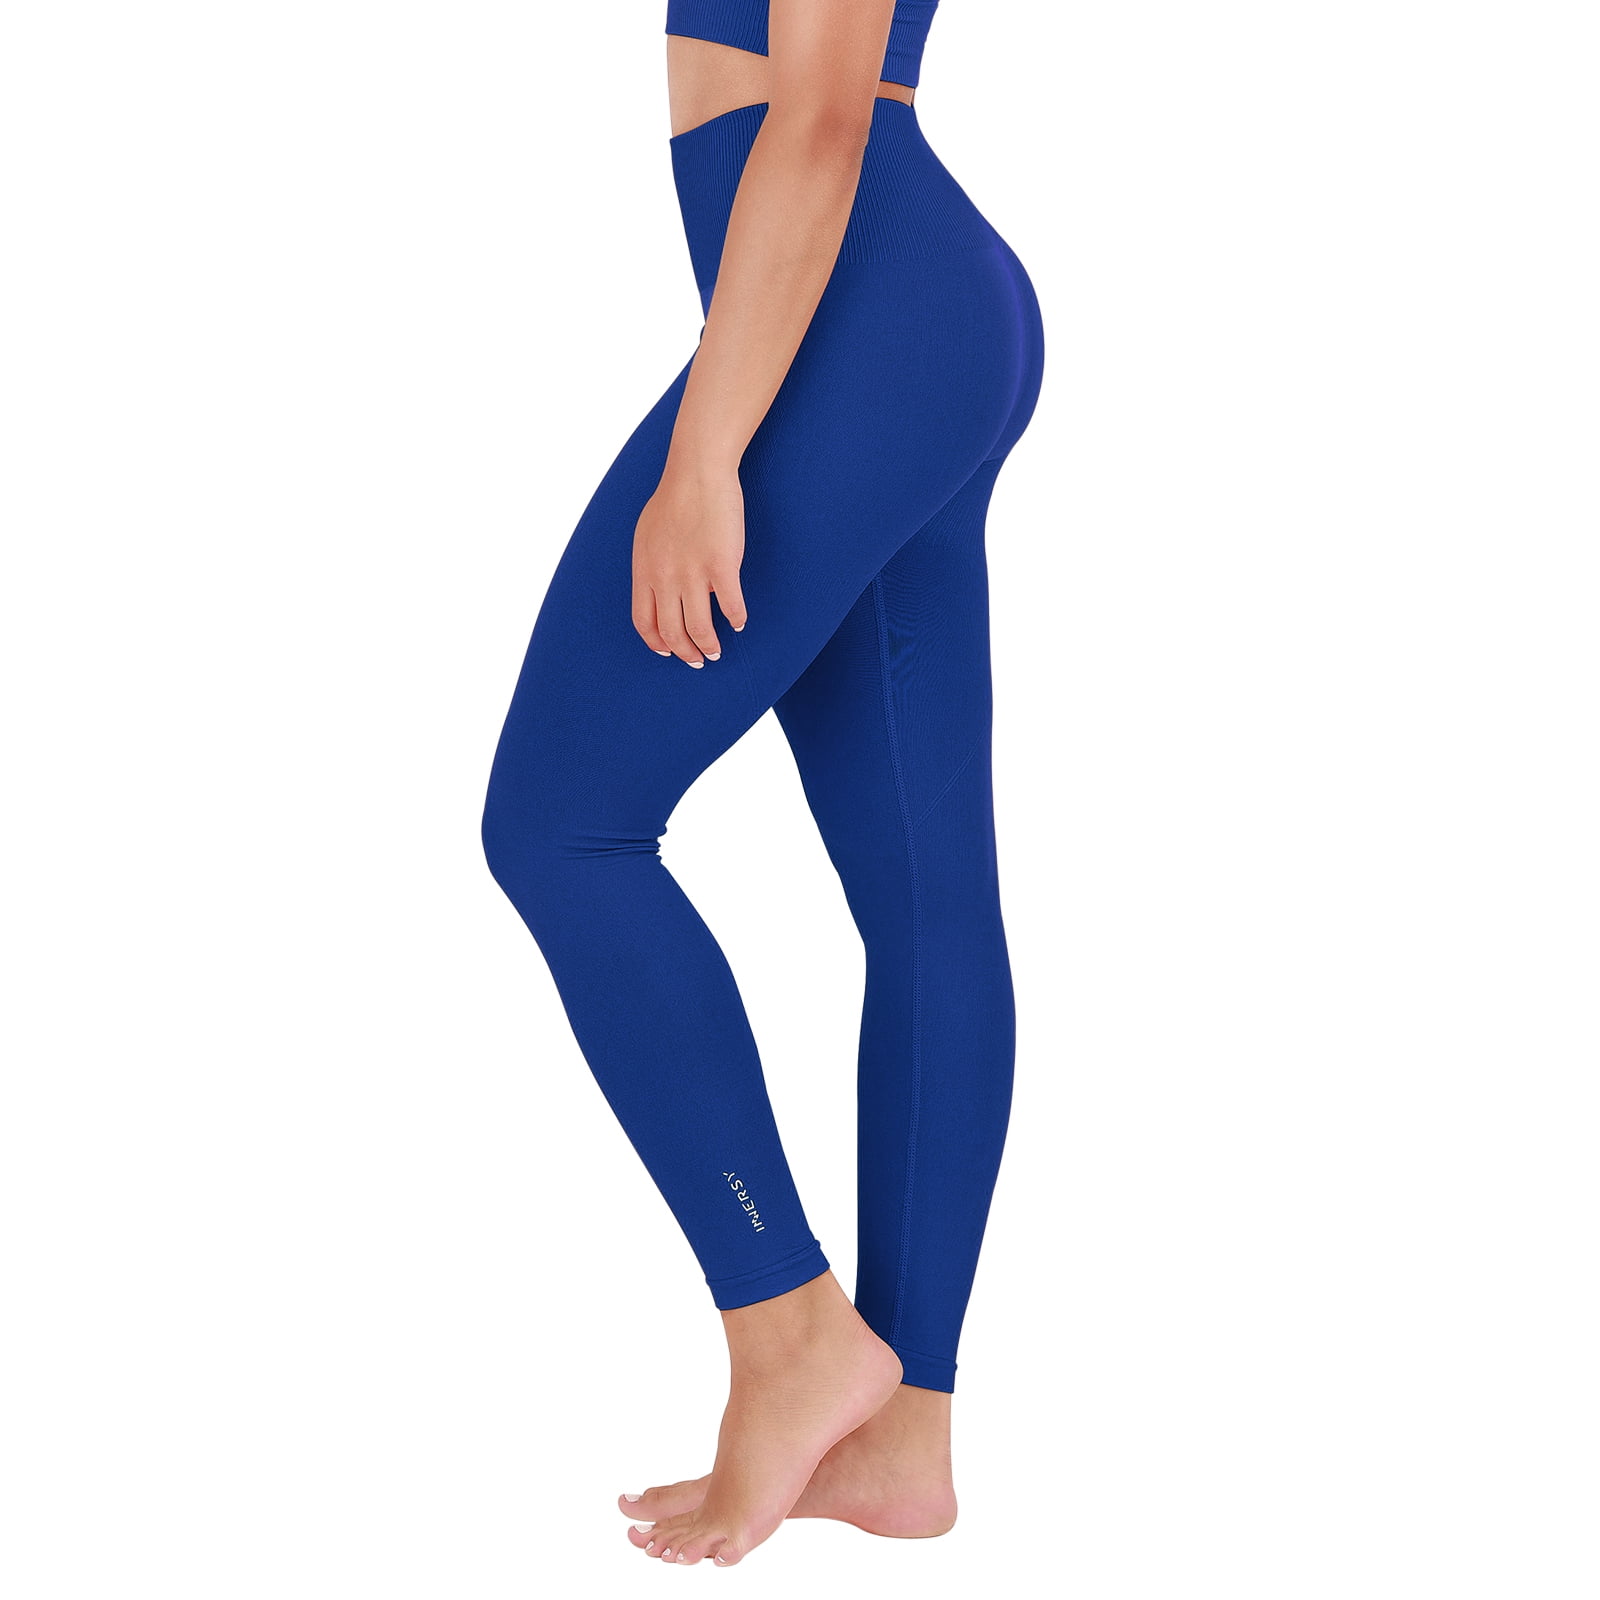 INNERSY Women's Leggings High Waisted Tummy Control Yoga Pants Workout  Legging (XS, Orange) 